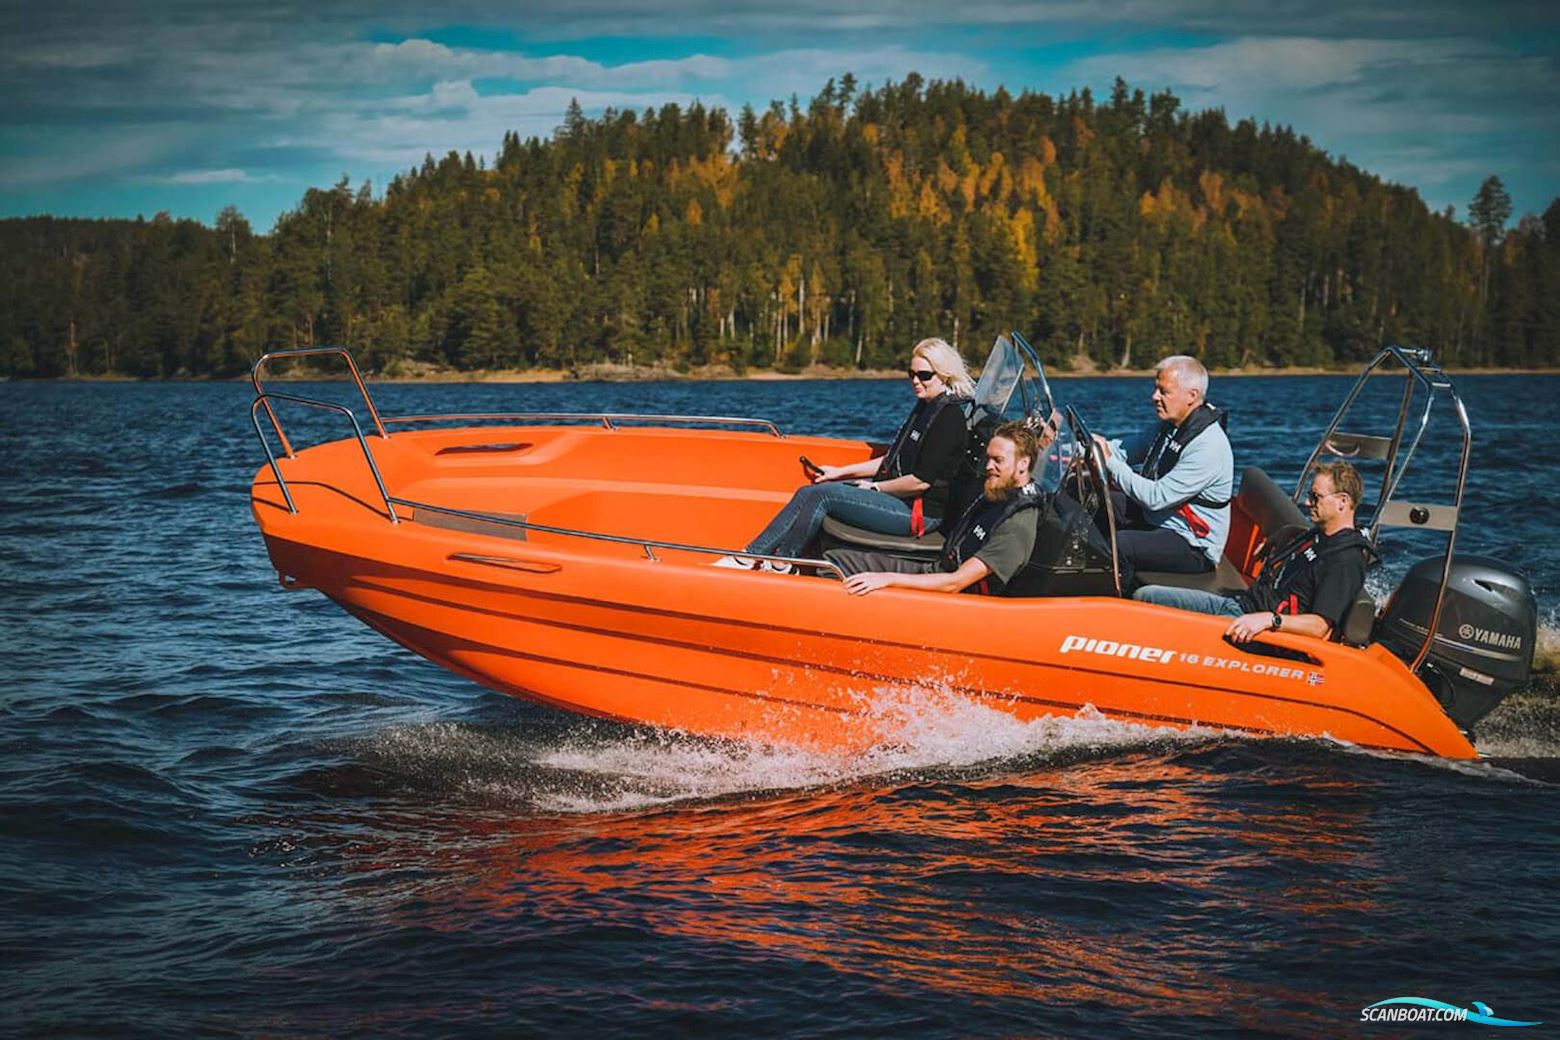 Pioner 16 Explorer Ad. Ed. "Double" Motor boat 2022, with Yamaha F40FETL engine, Denmark